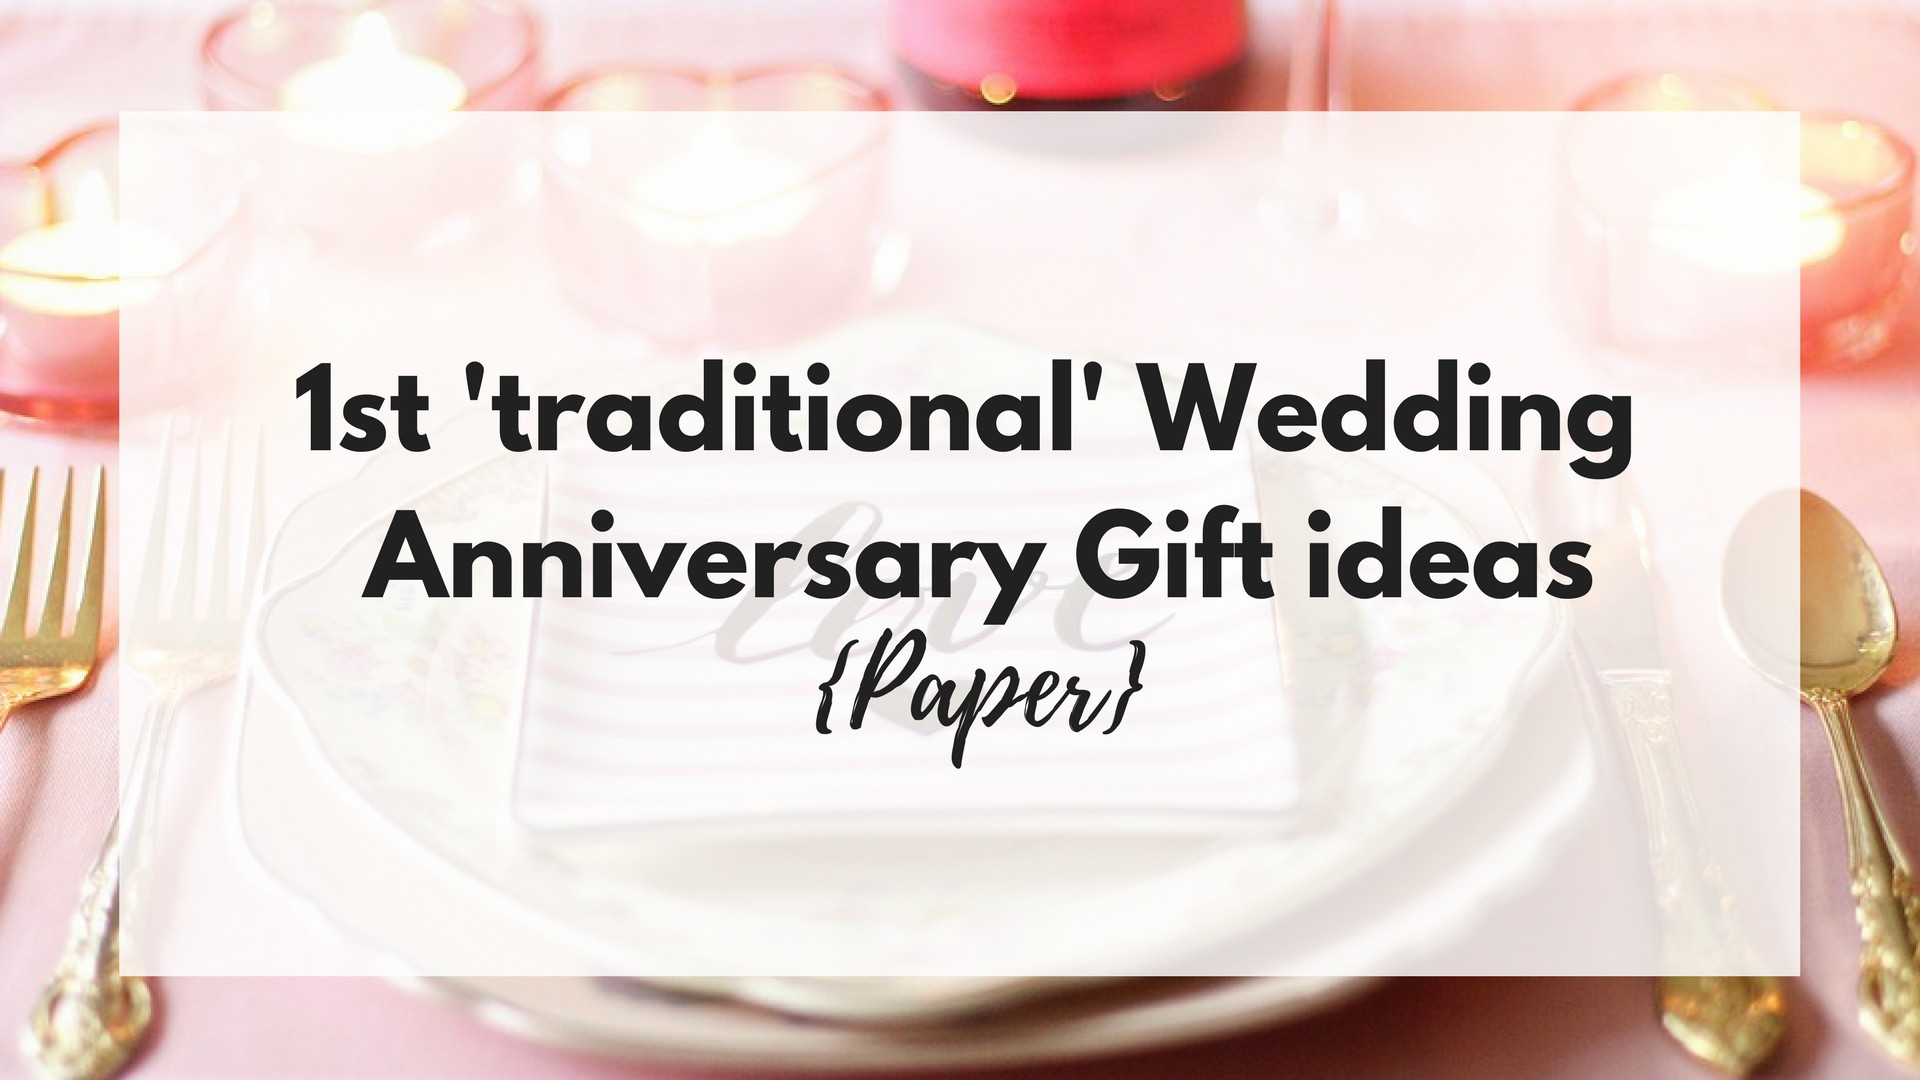 Traditional Wedding Anniversary Gift Ideas
 1st ‘traditional’ Wedding Anniversary Gift ideas Paper